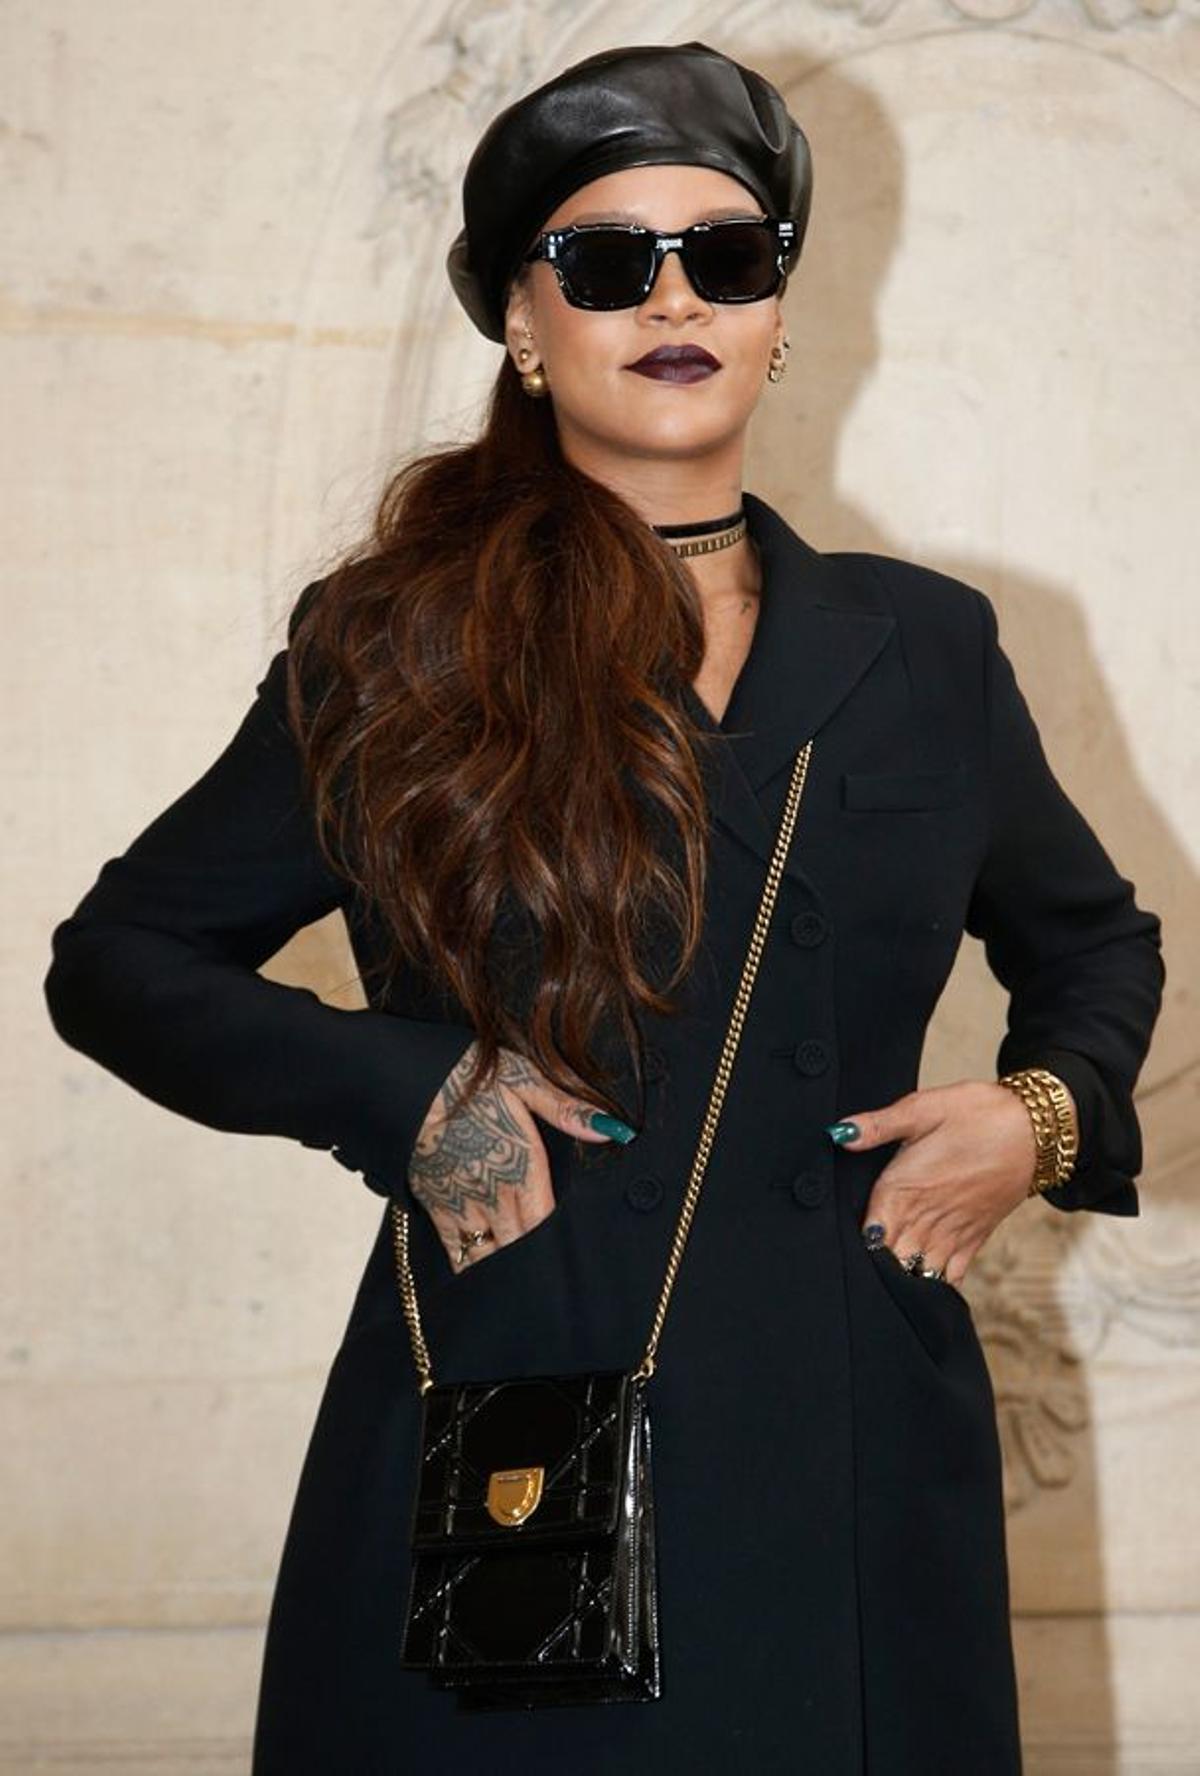 Vuelve la boina: Rihanna con boina y abrigo negro